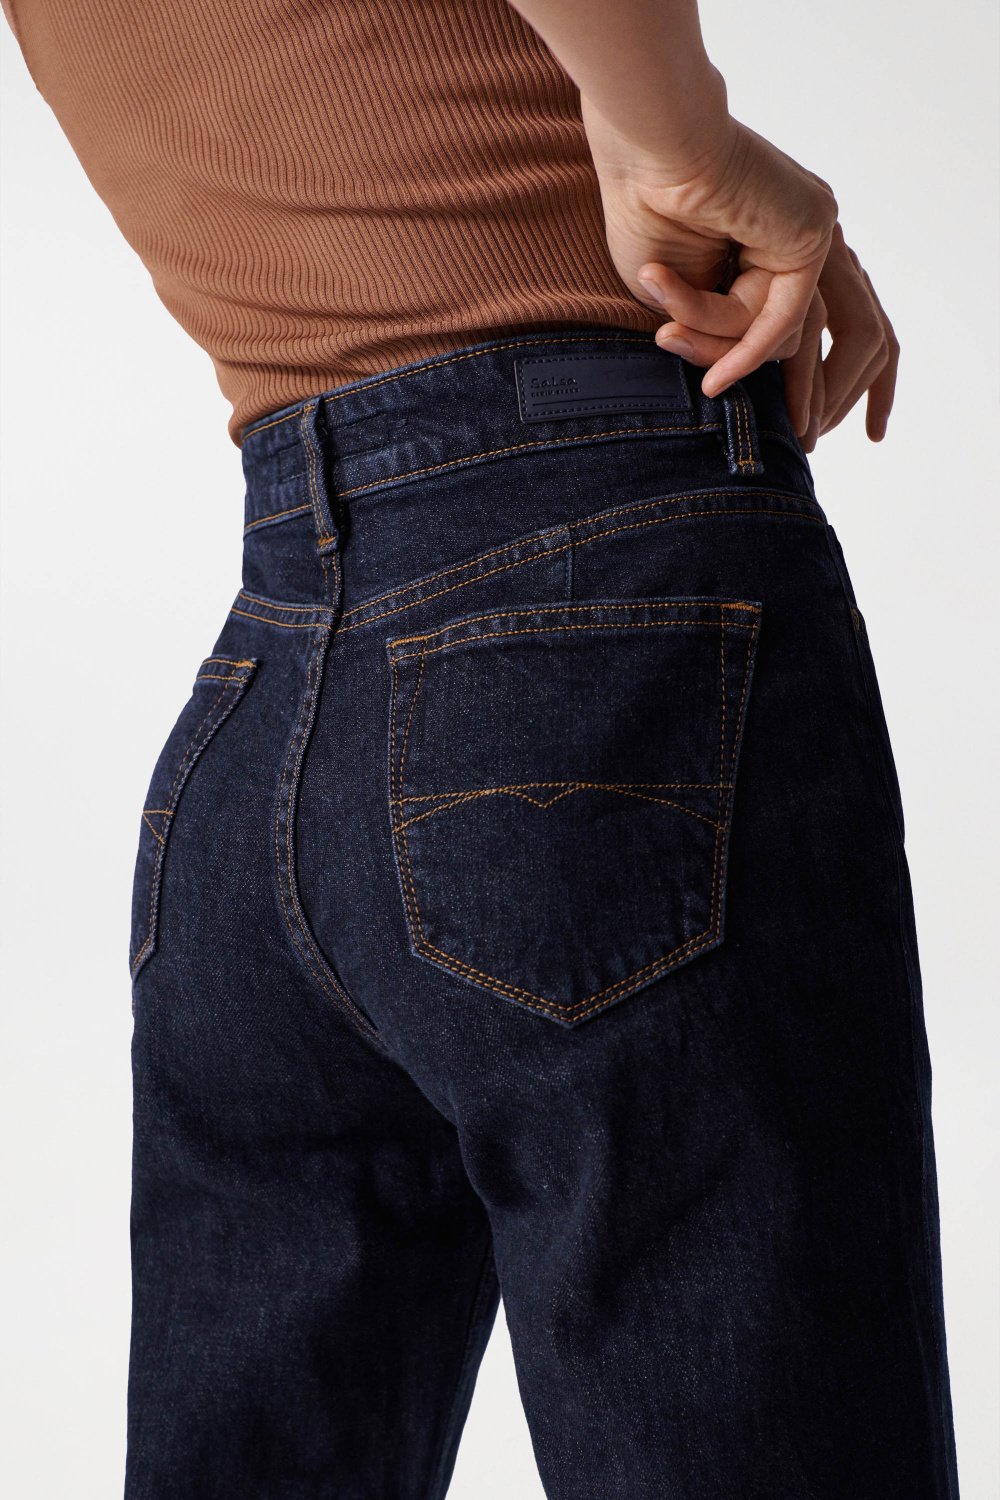 True Cropped Slim Comfort in Medium Wash Jeans Salsa Jeans   